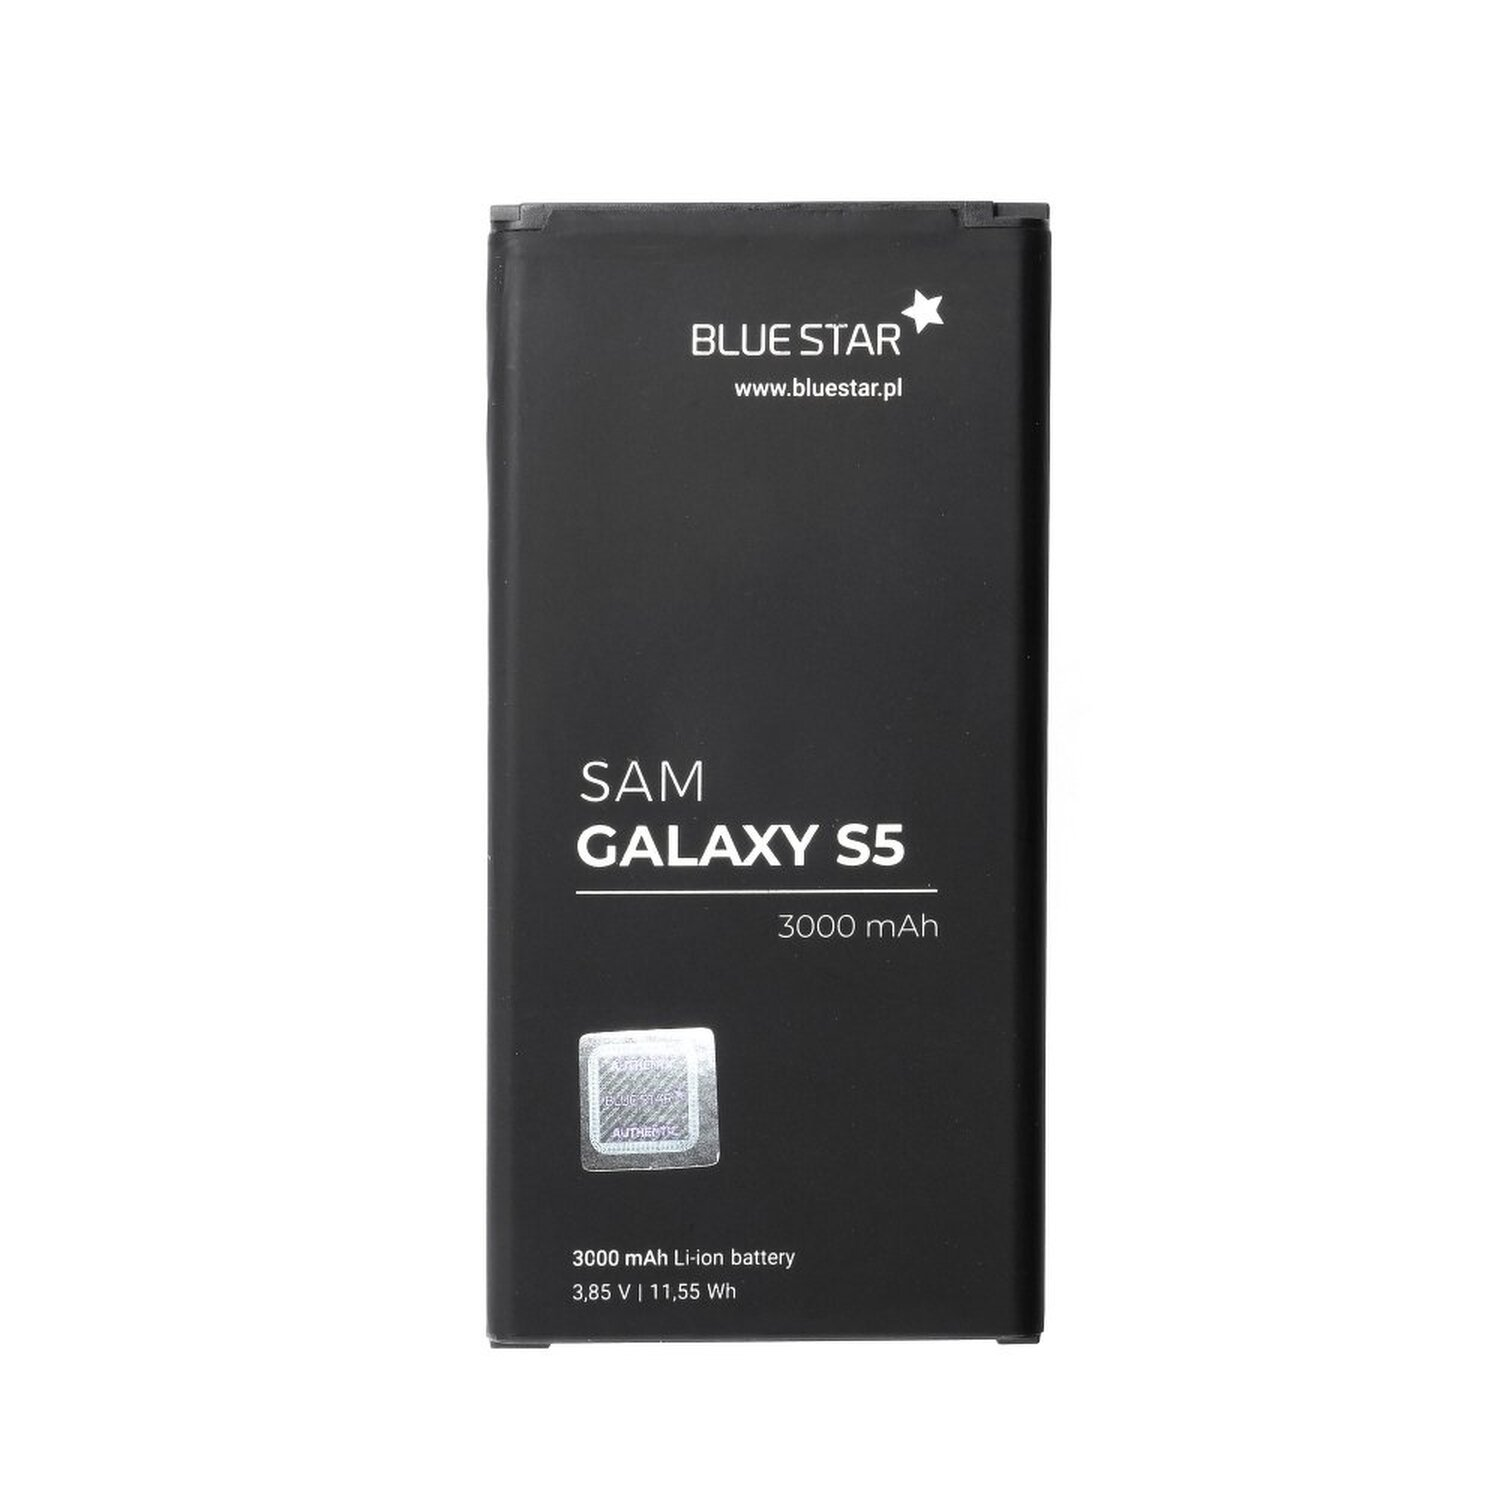 Samsung für BLUESTAR Handyakku Li-Ion S5 Akku Galaxy